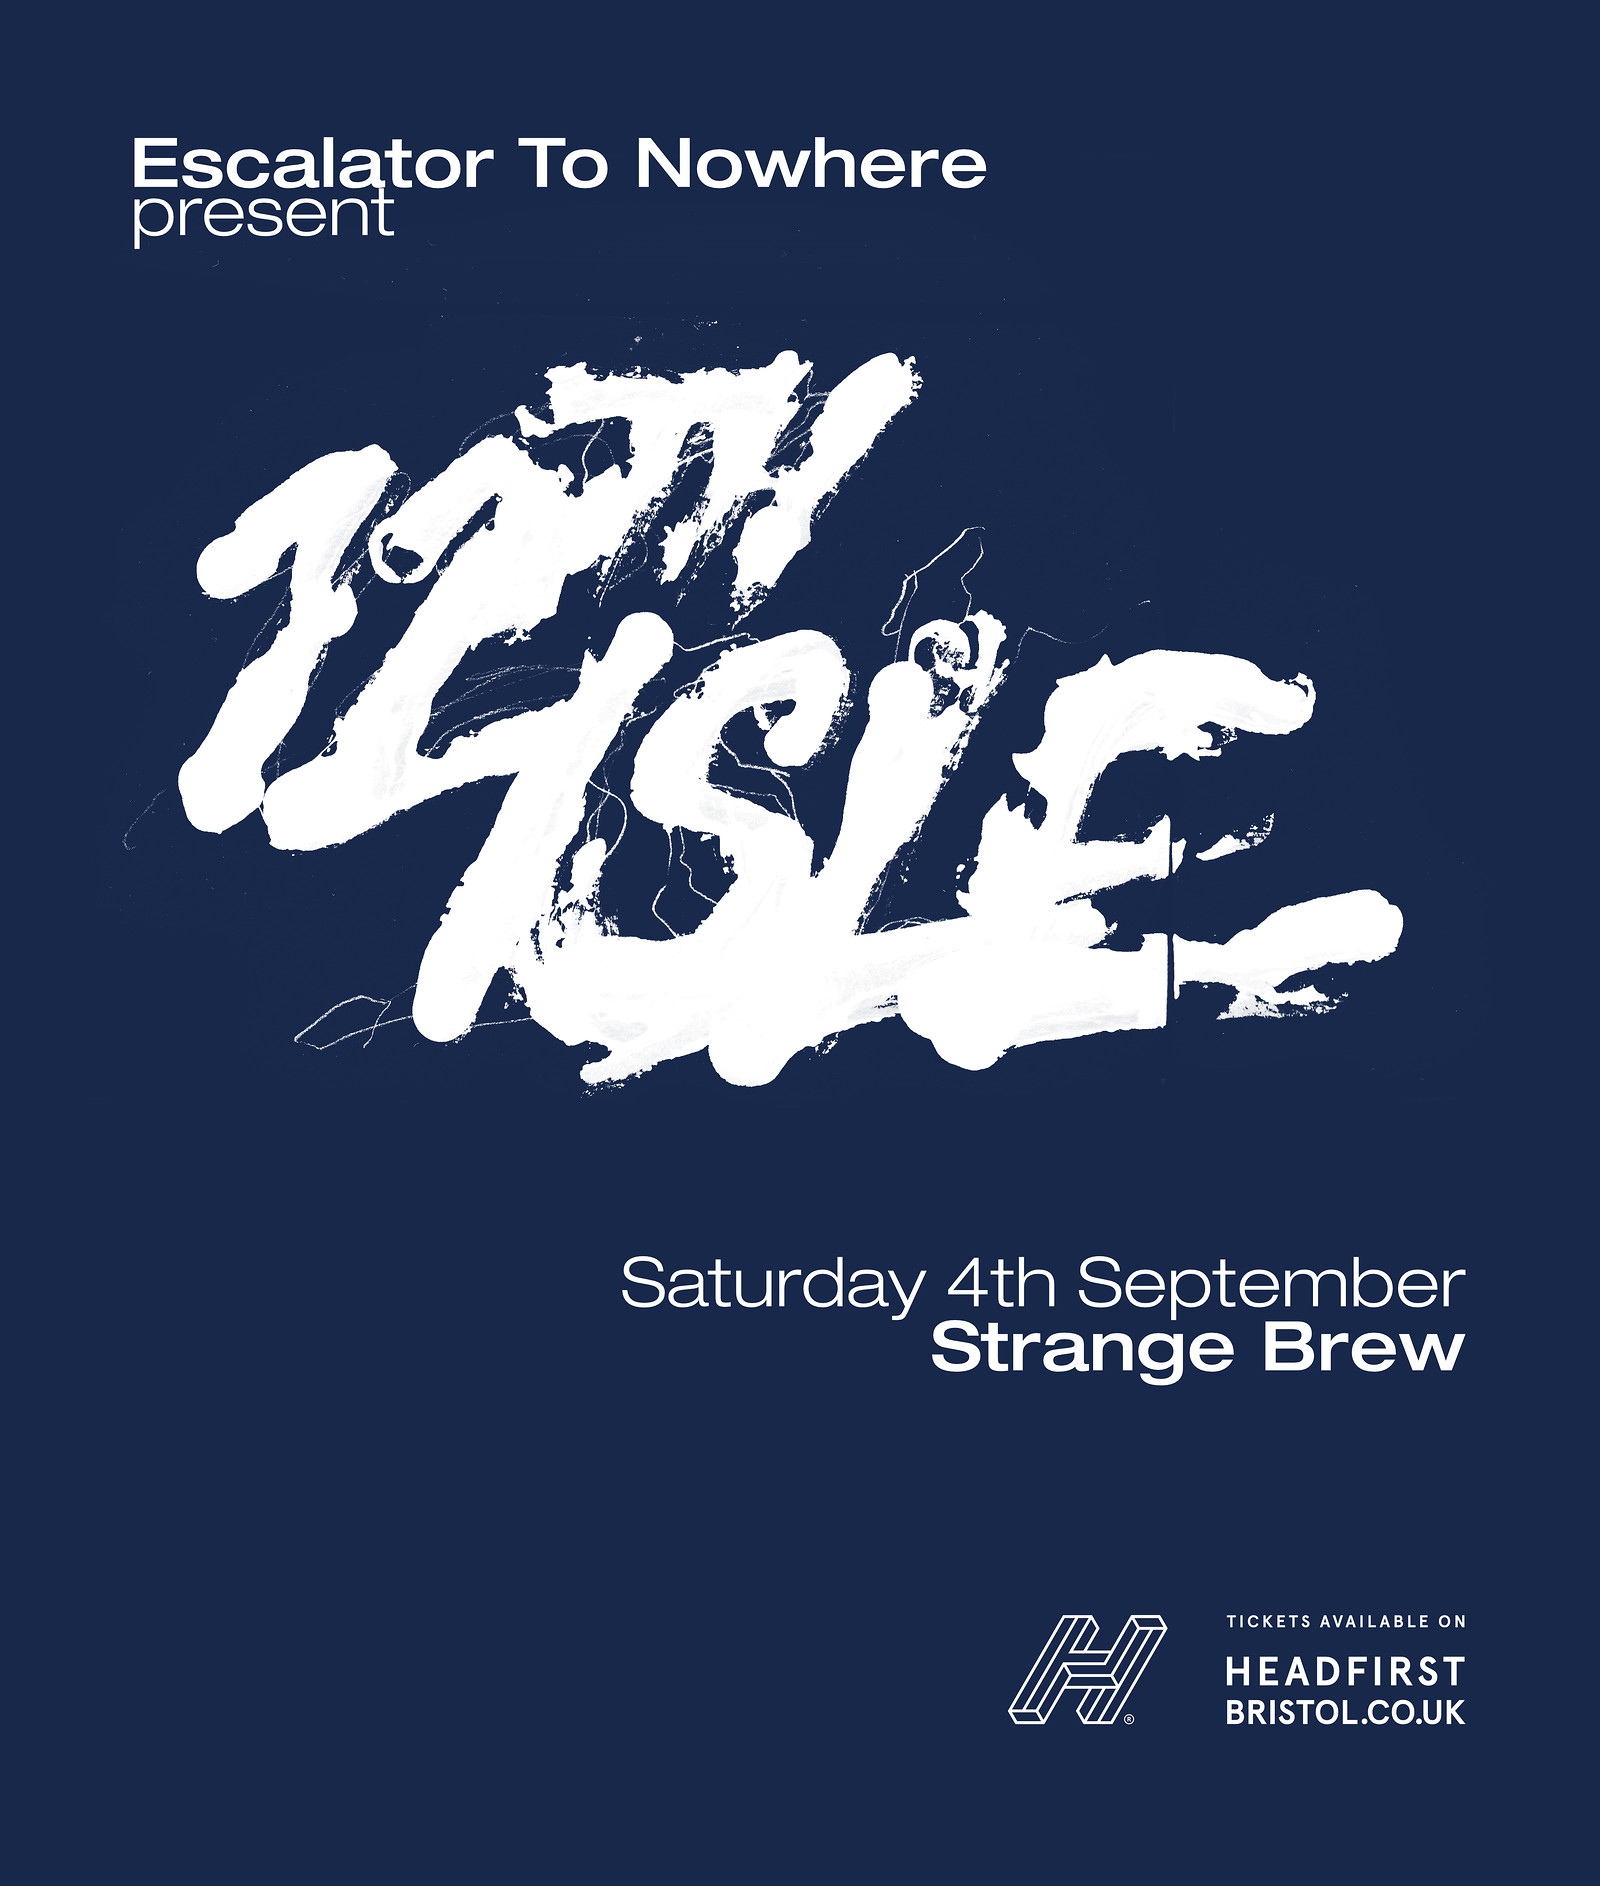 Escalator To Nowhere present 12th Isle at Strange Brew